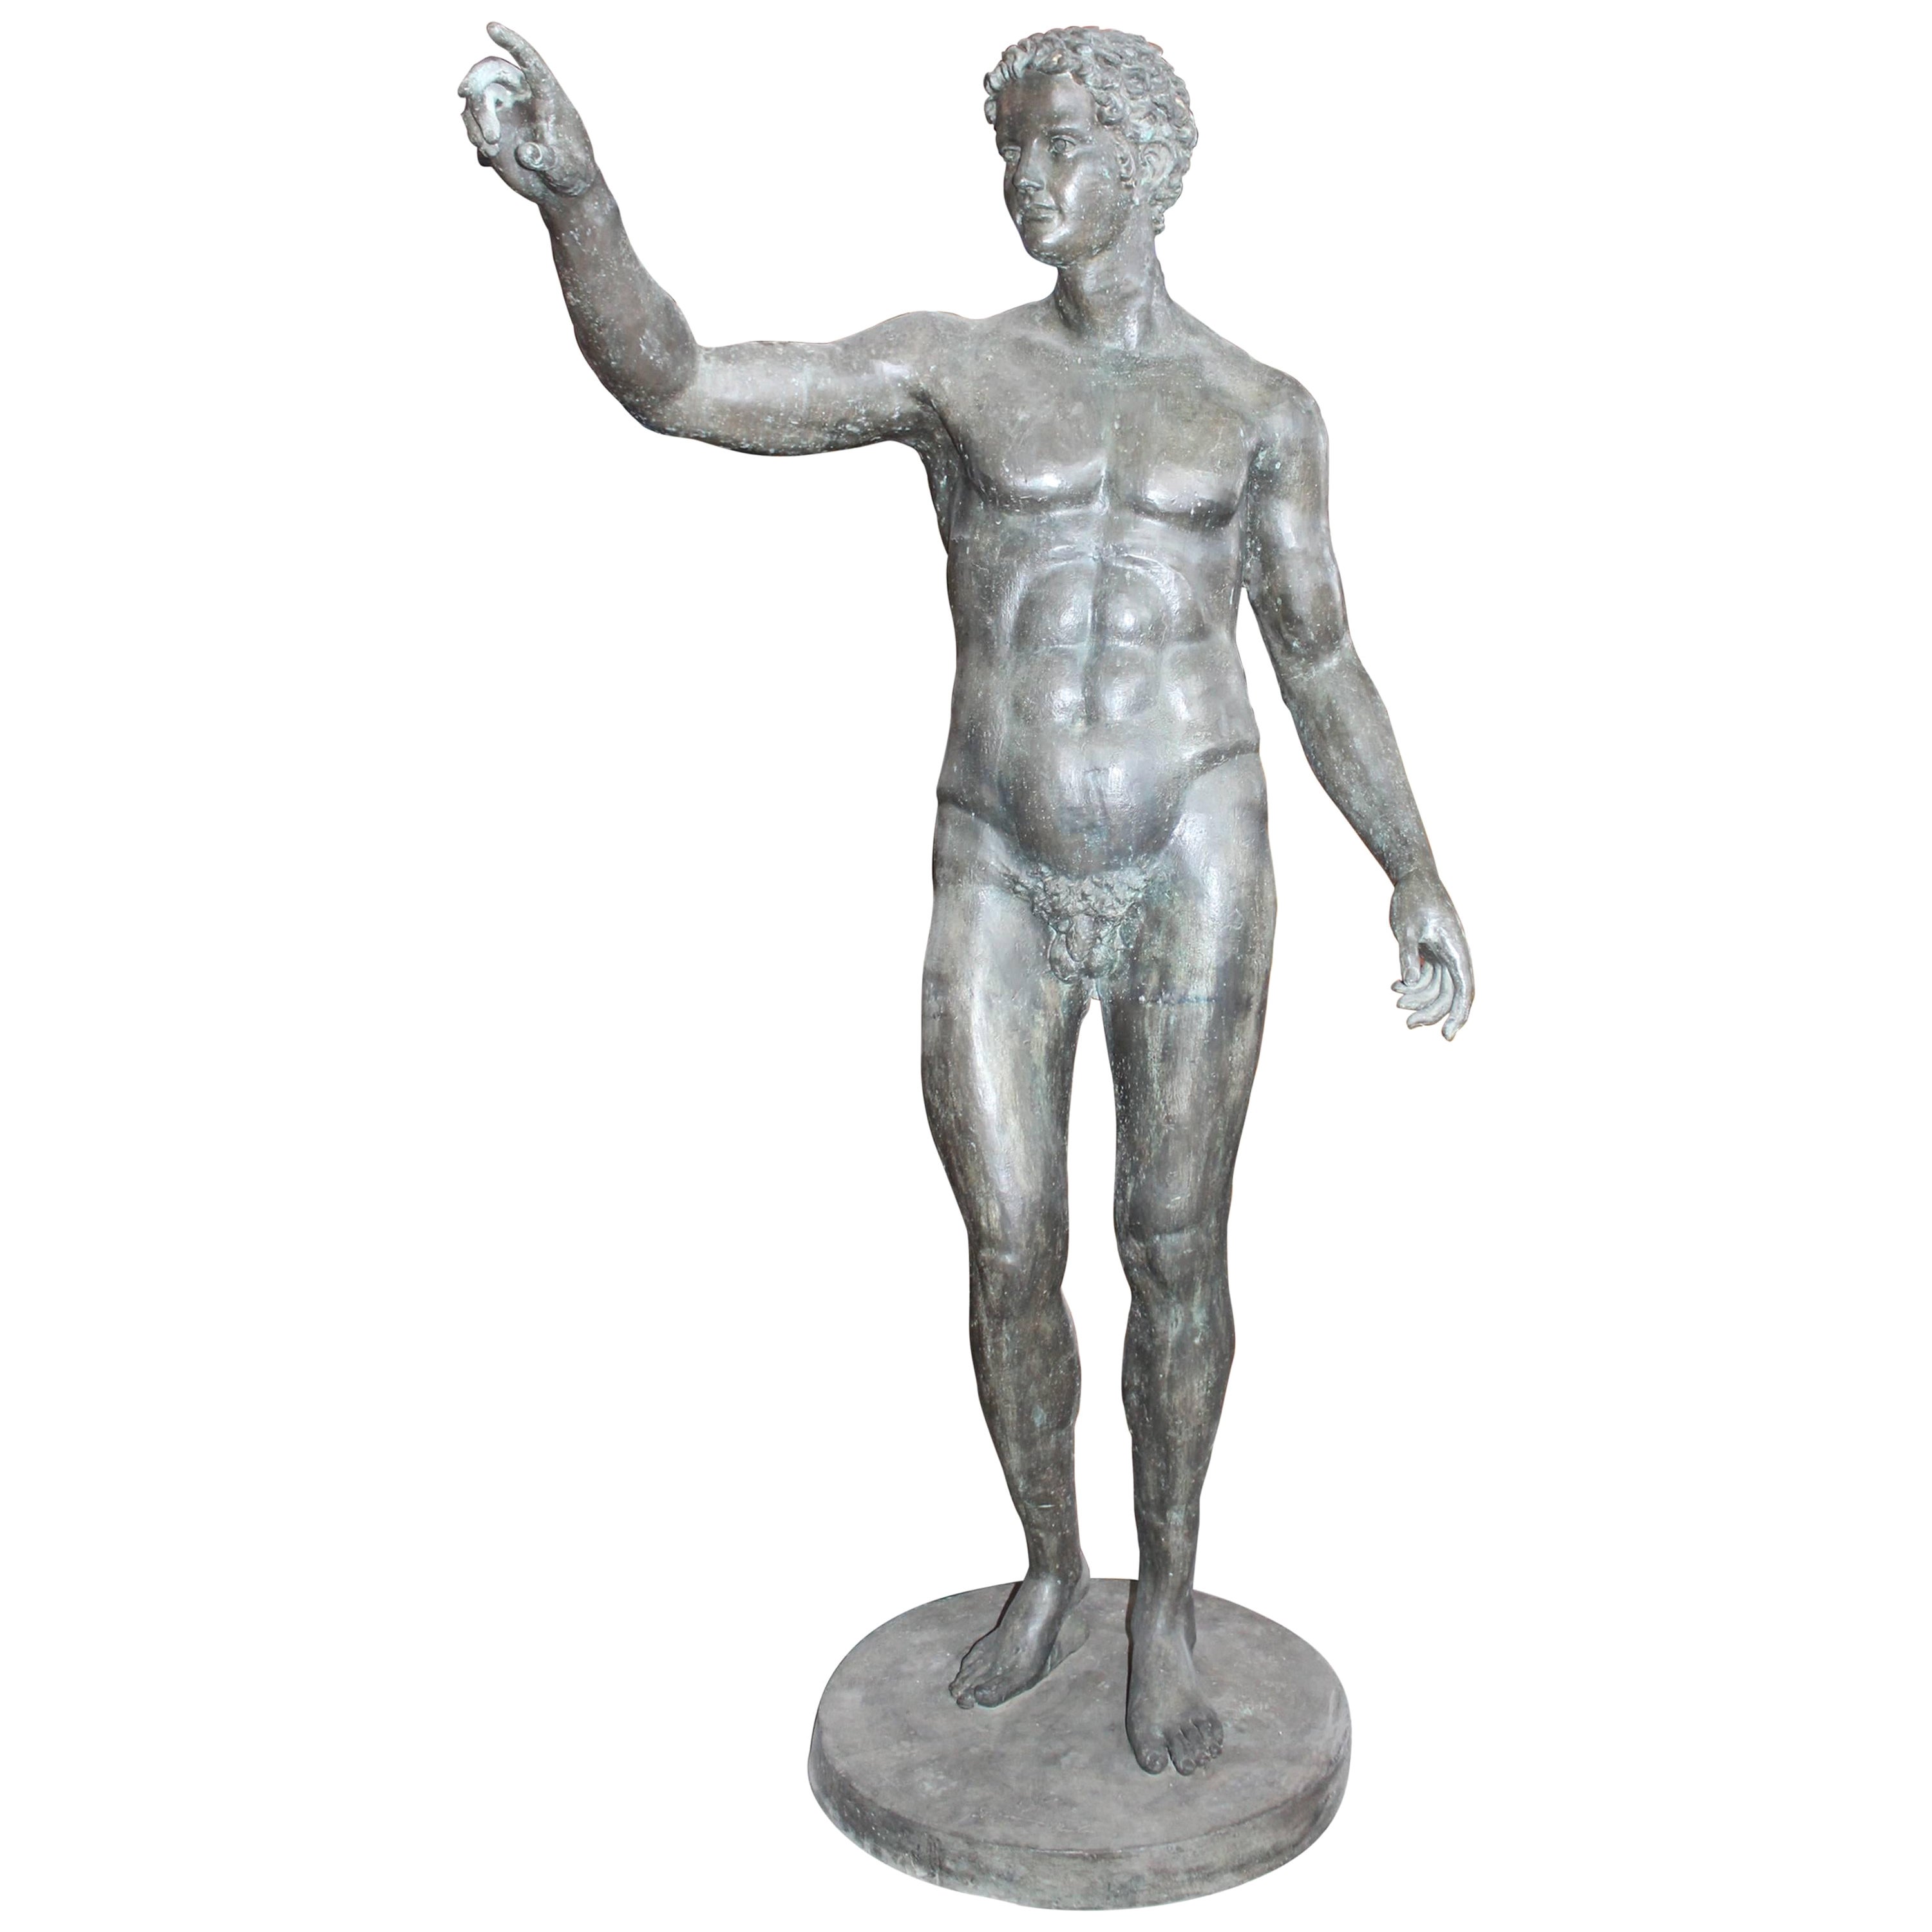 Sculpture en bronze grandeur nature d'un athlète grec